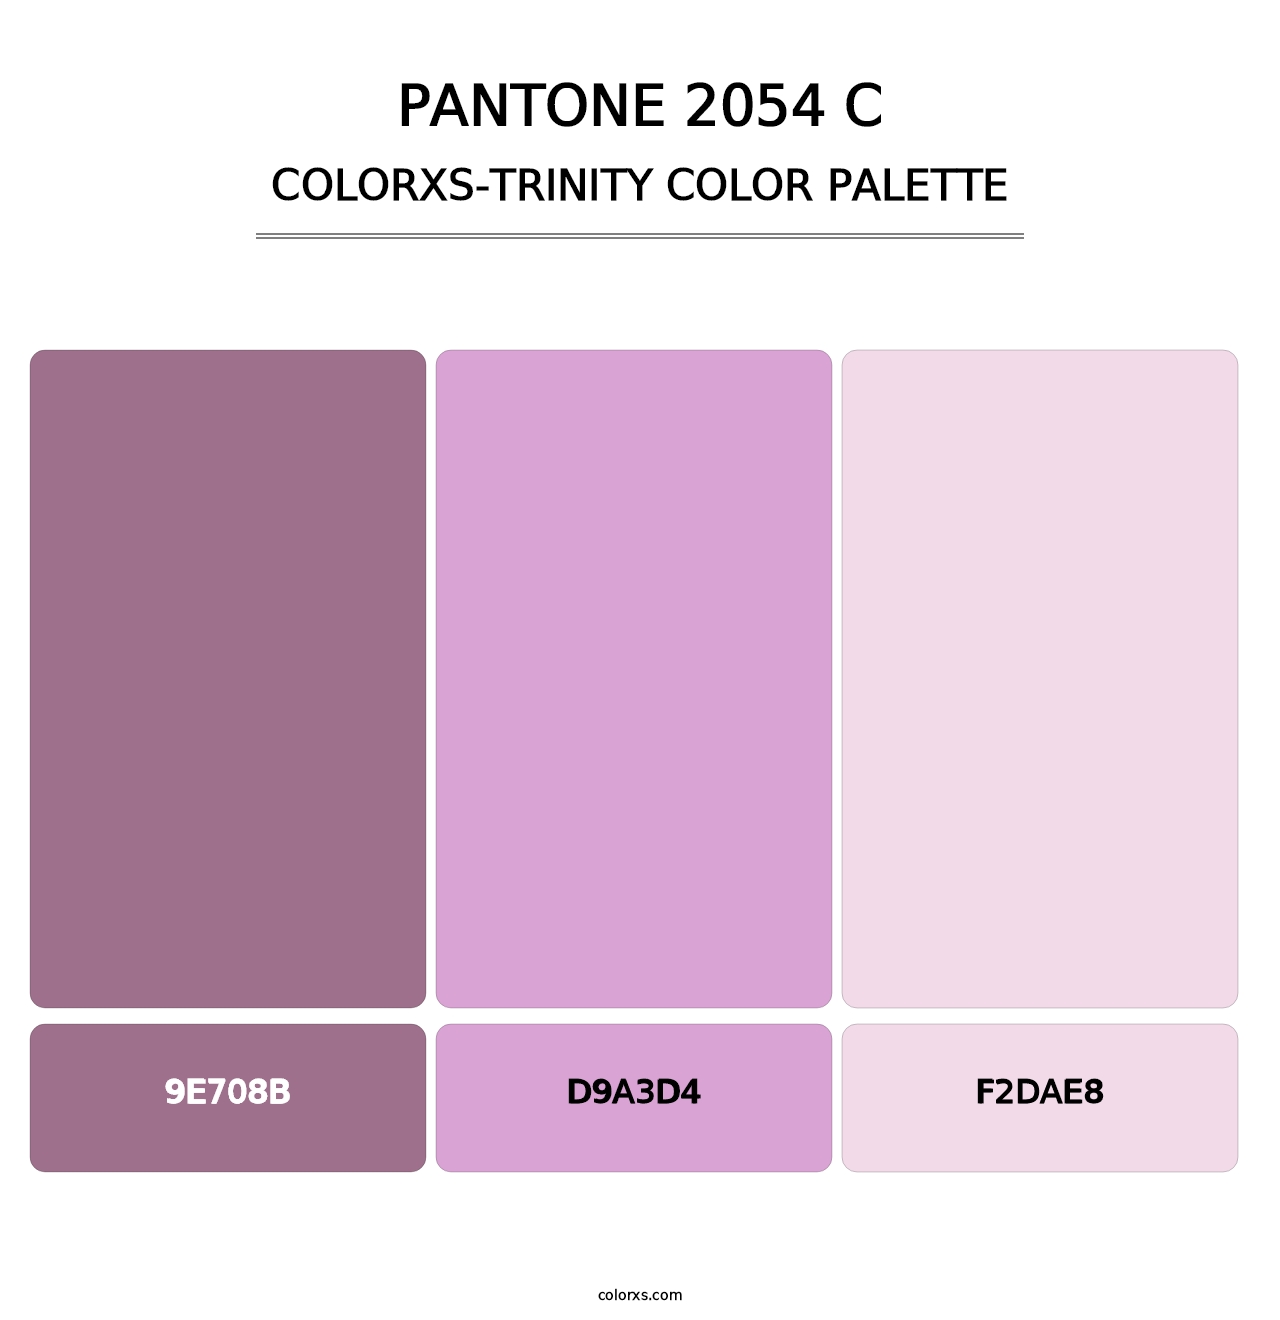 PANTONE 2054 C - Colorxs Trinity Palette